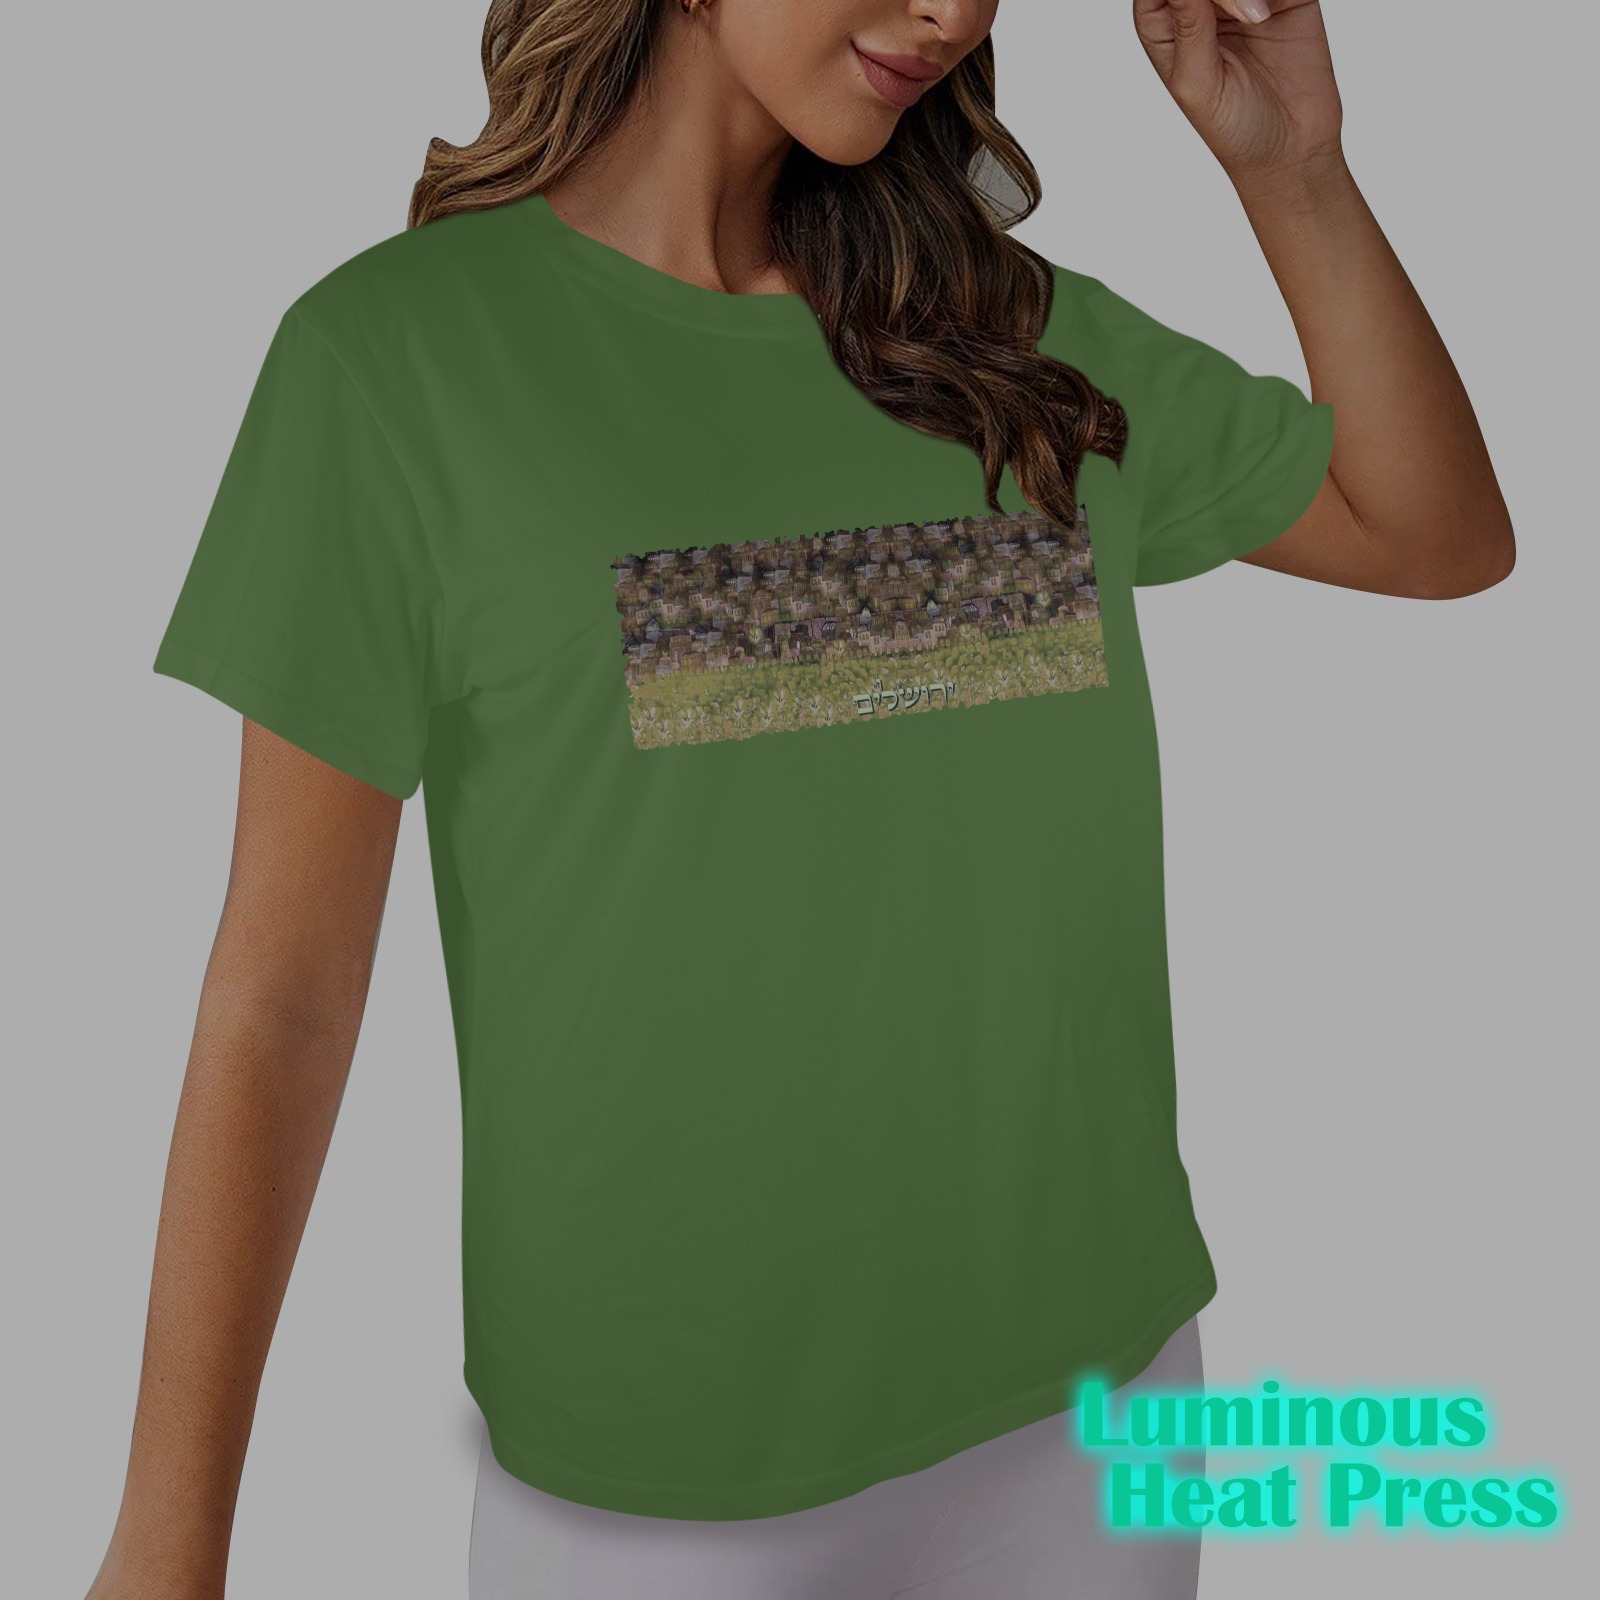 Jerusalem dechire jaune Women's Glow in the Dark T-shirt (Front Printing)